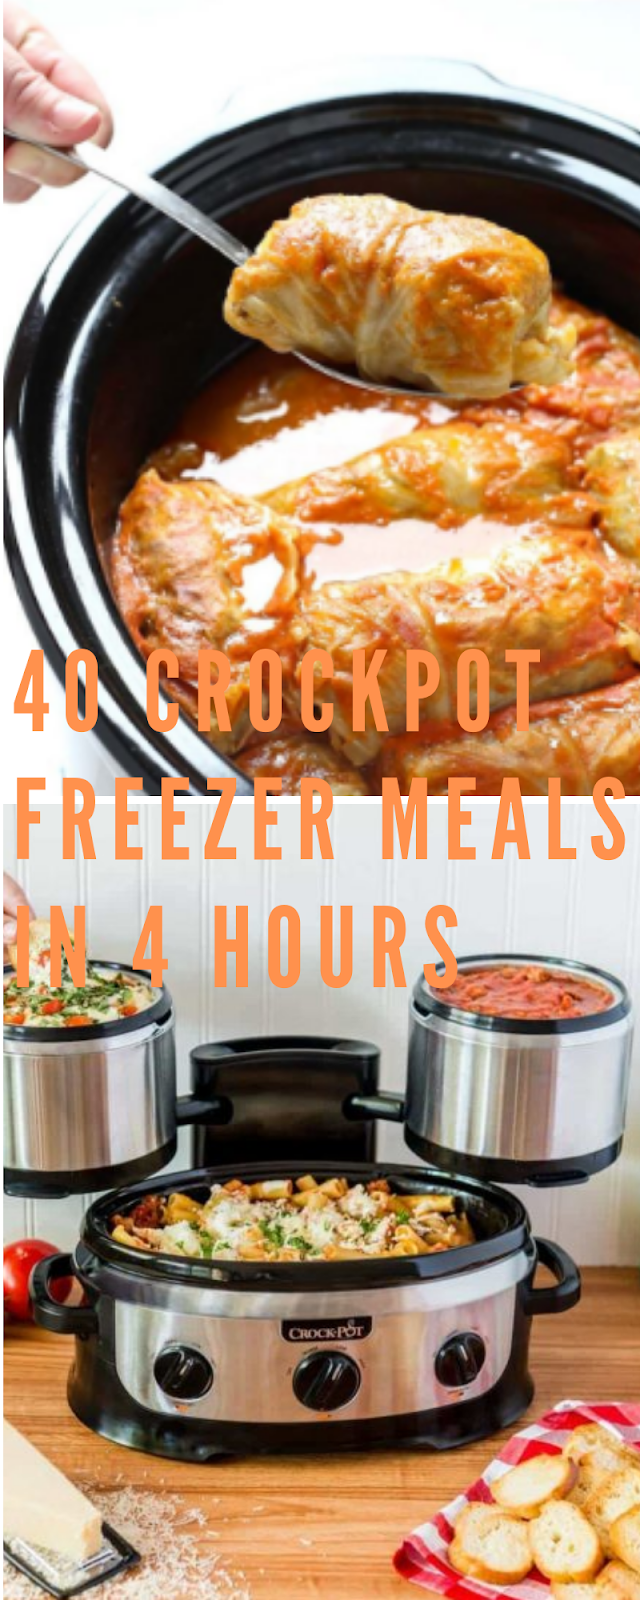 40 crockpot freezer meals in 4 hours Ready To Go - 77bestrecipes